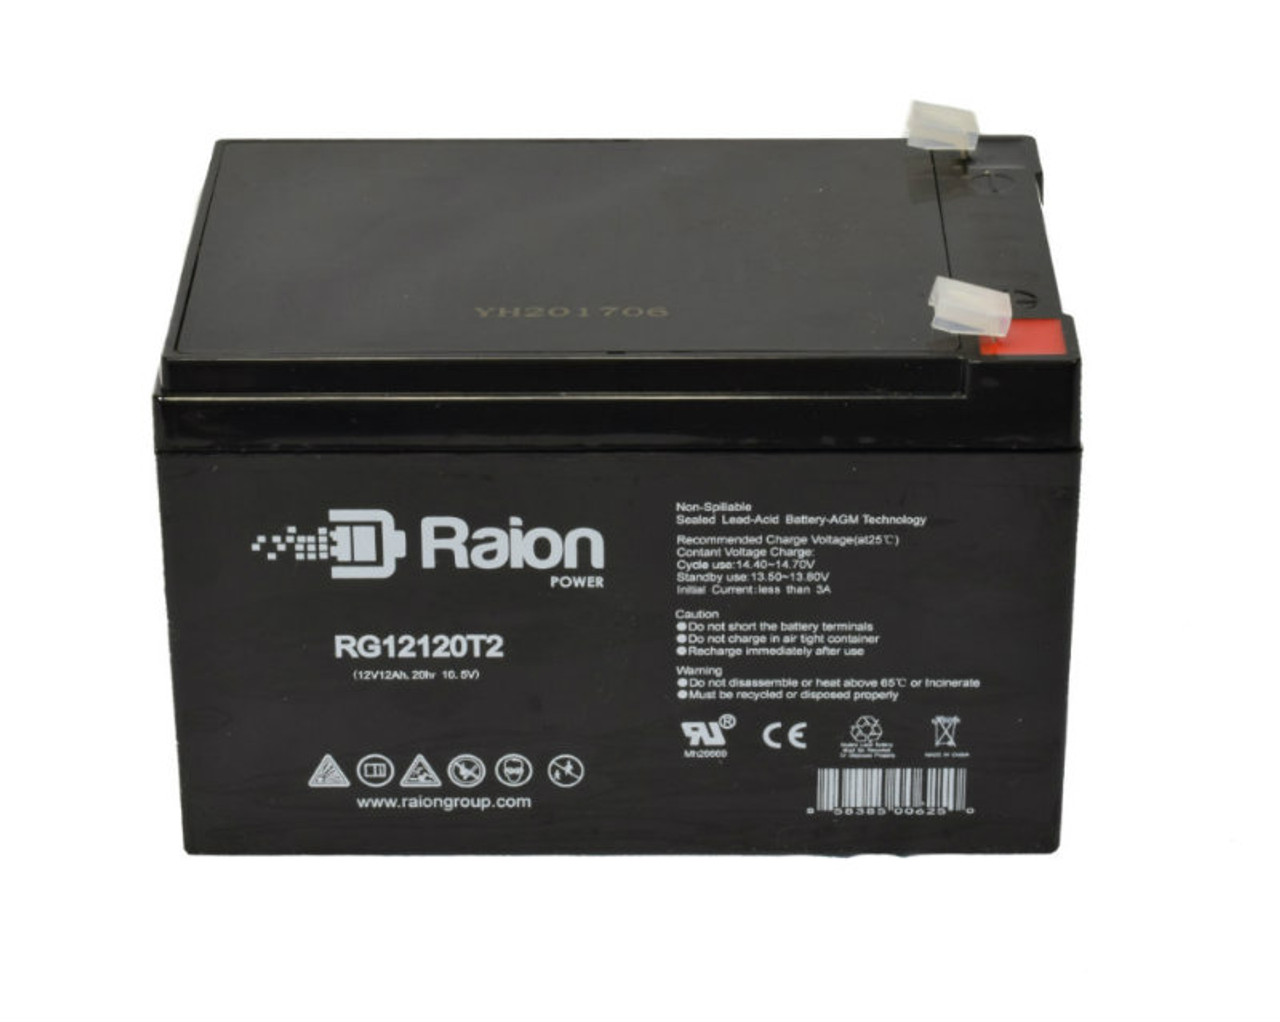 Raion Power RG12120T2 SLA Battery for X-Treme City Rider